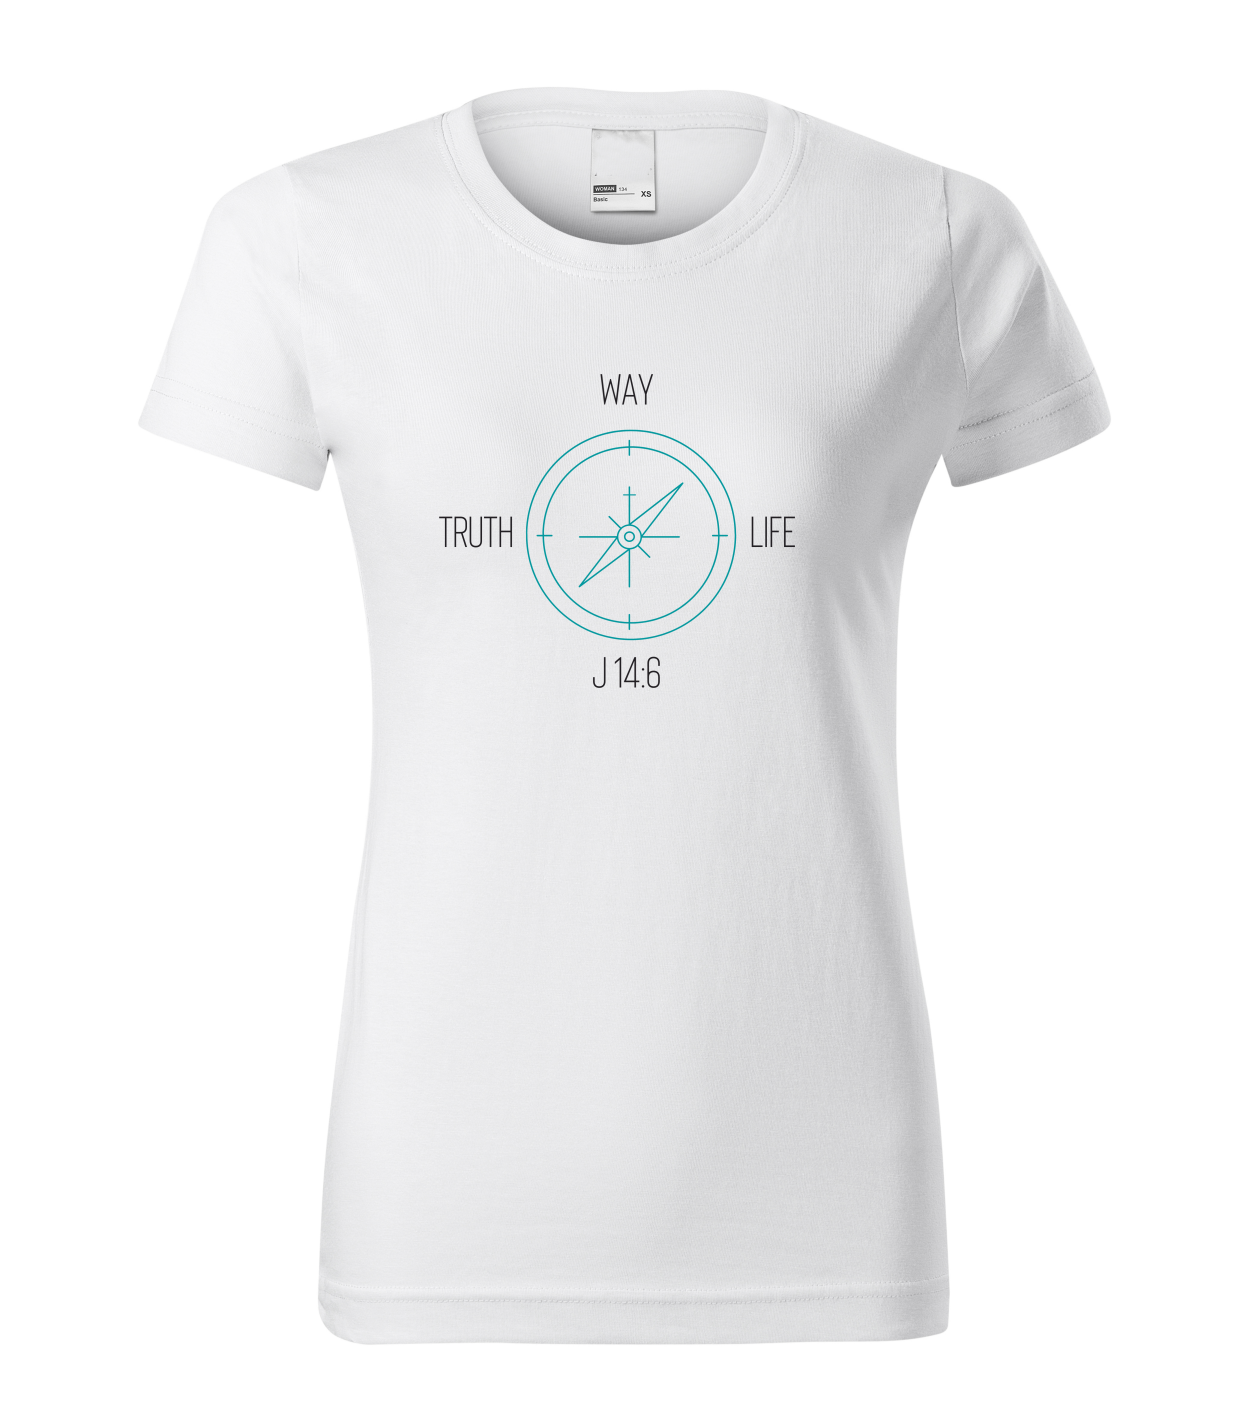 T-shirt Way Truth Life,Droga Prawda Życie – kompas